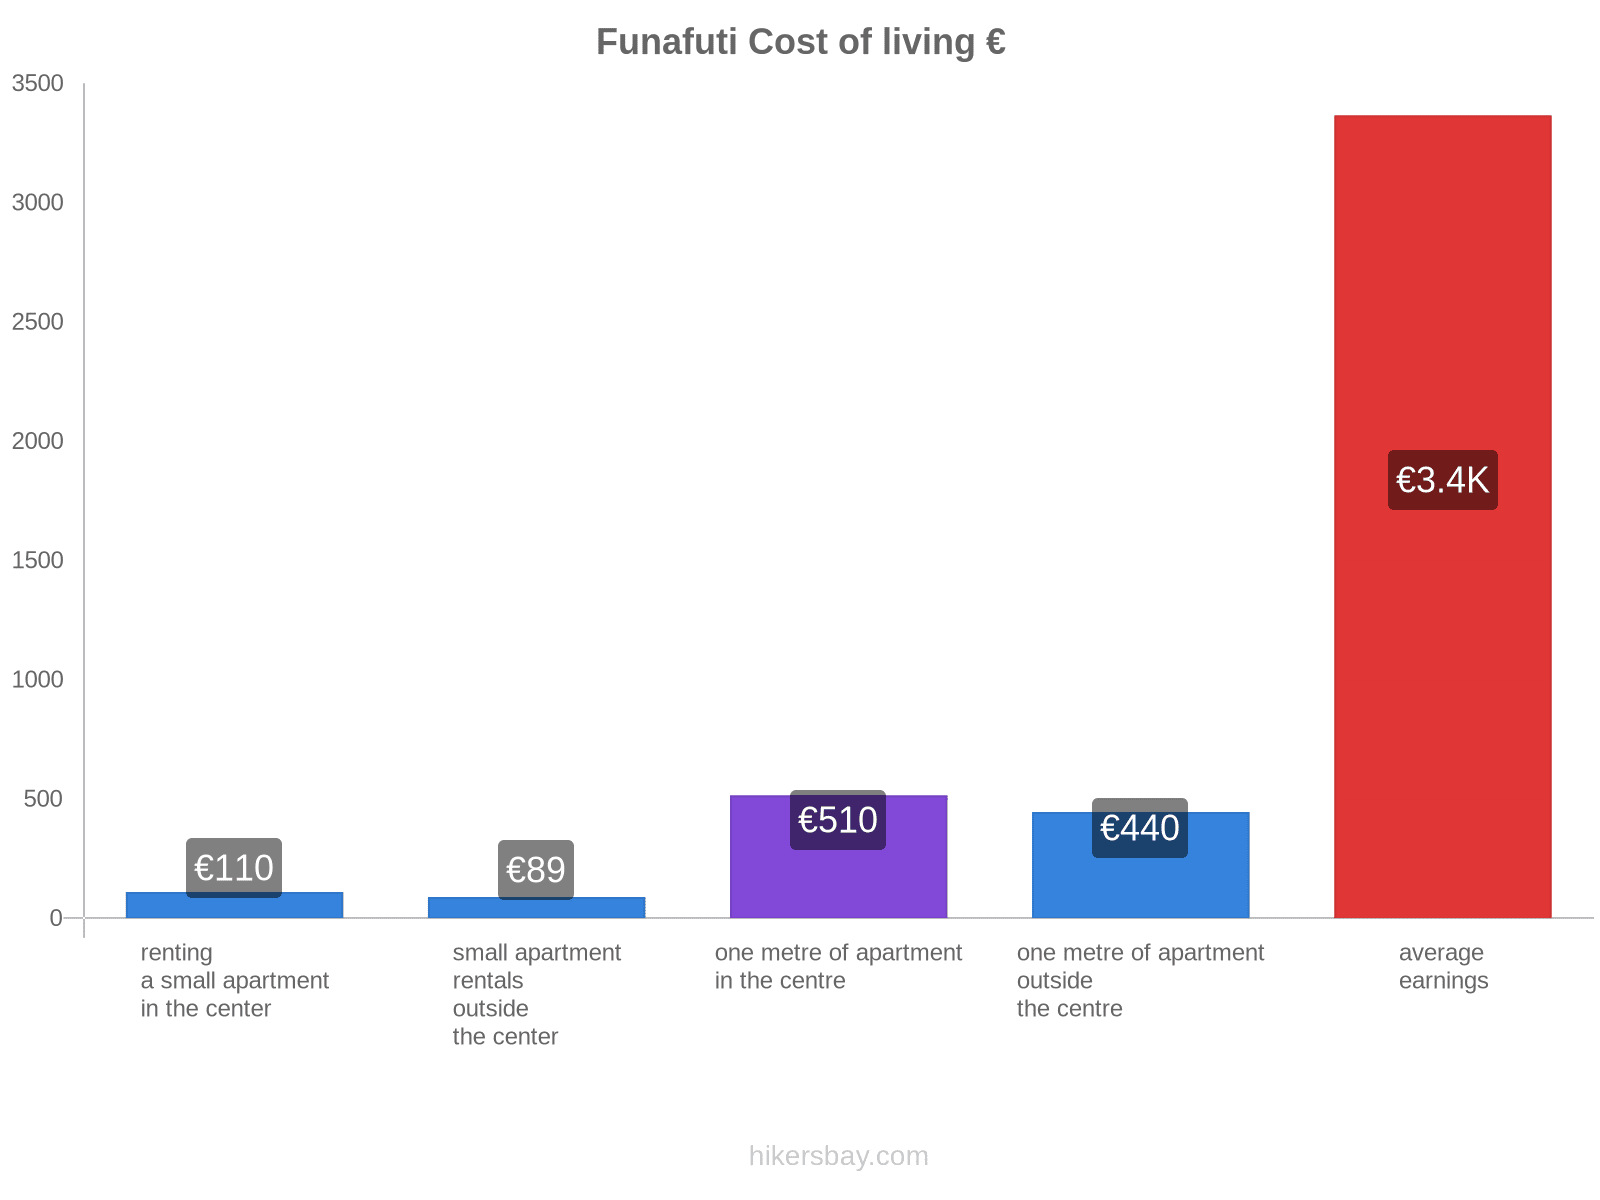 Funafuti cost of living hikersbay.com